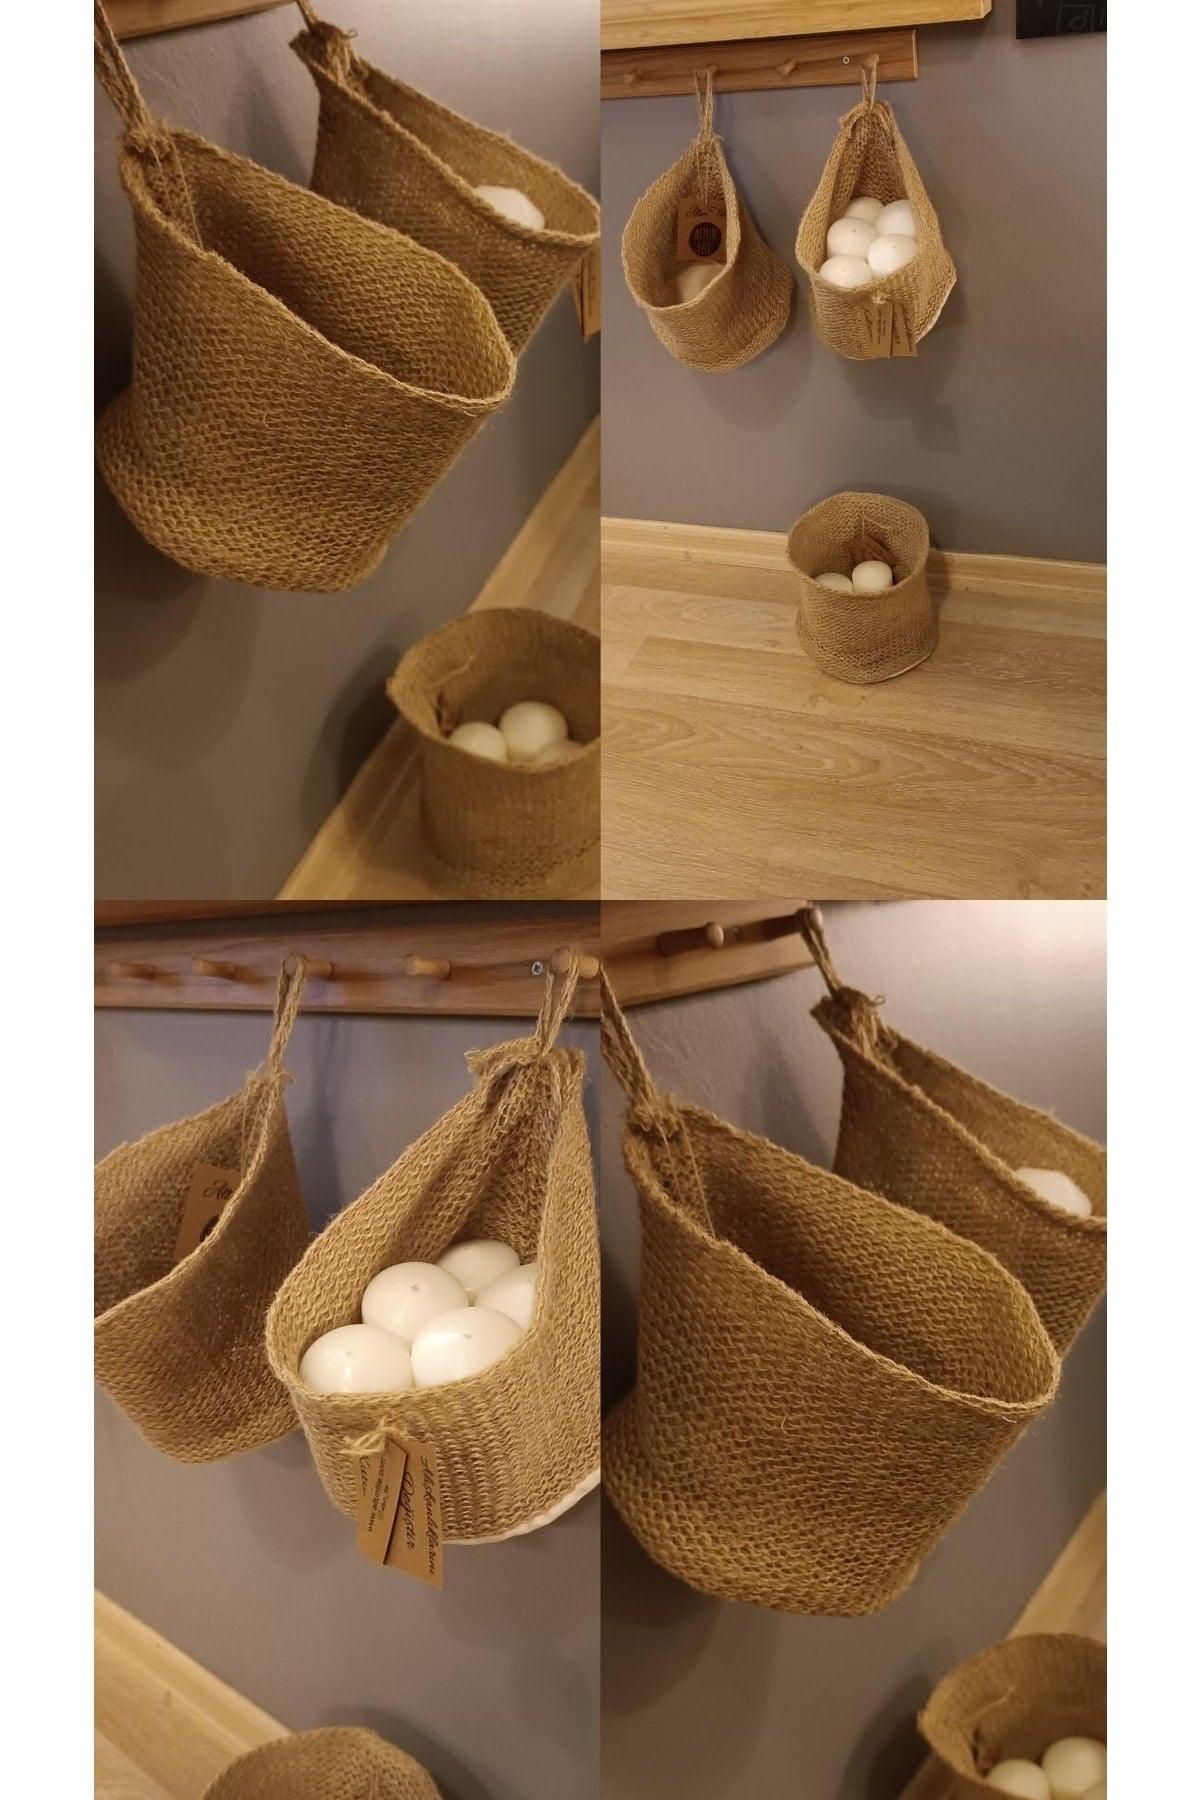 1 Piece Decorative Wicker Basket, Jute Weave, Hanging Wall Basket Organizer - Swordslife